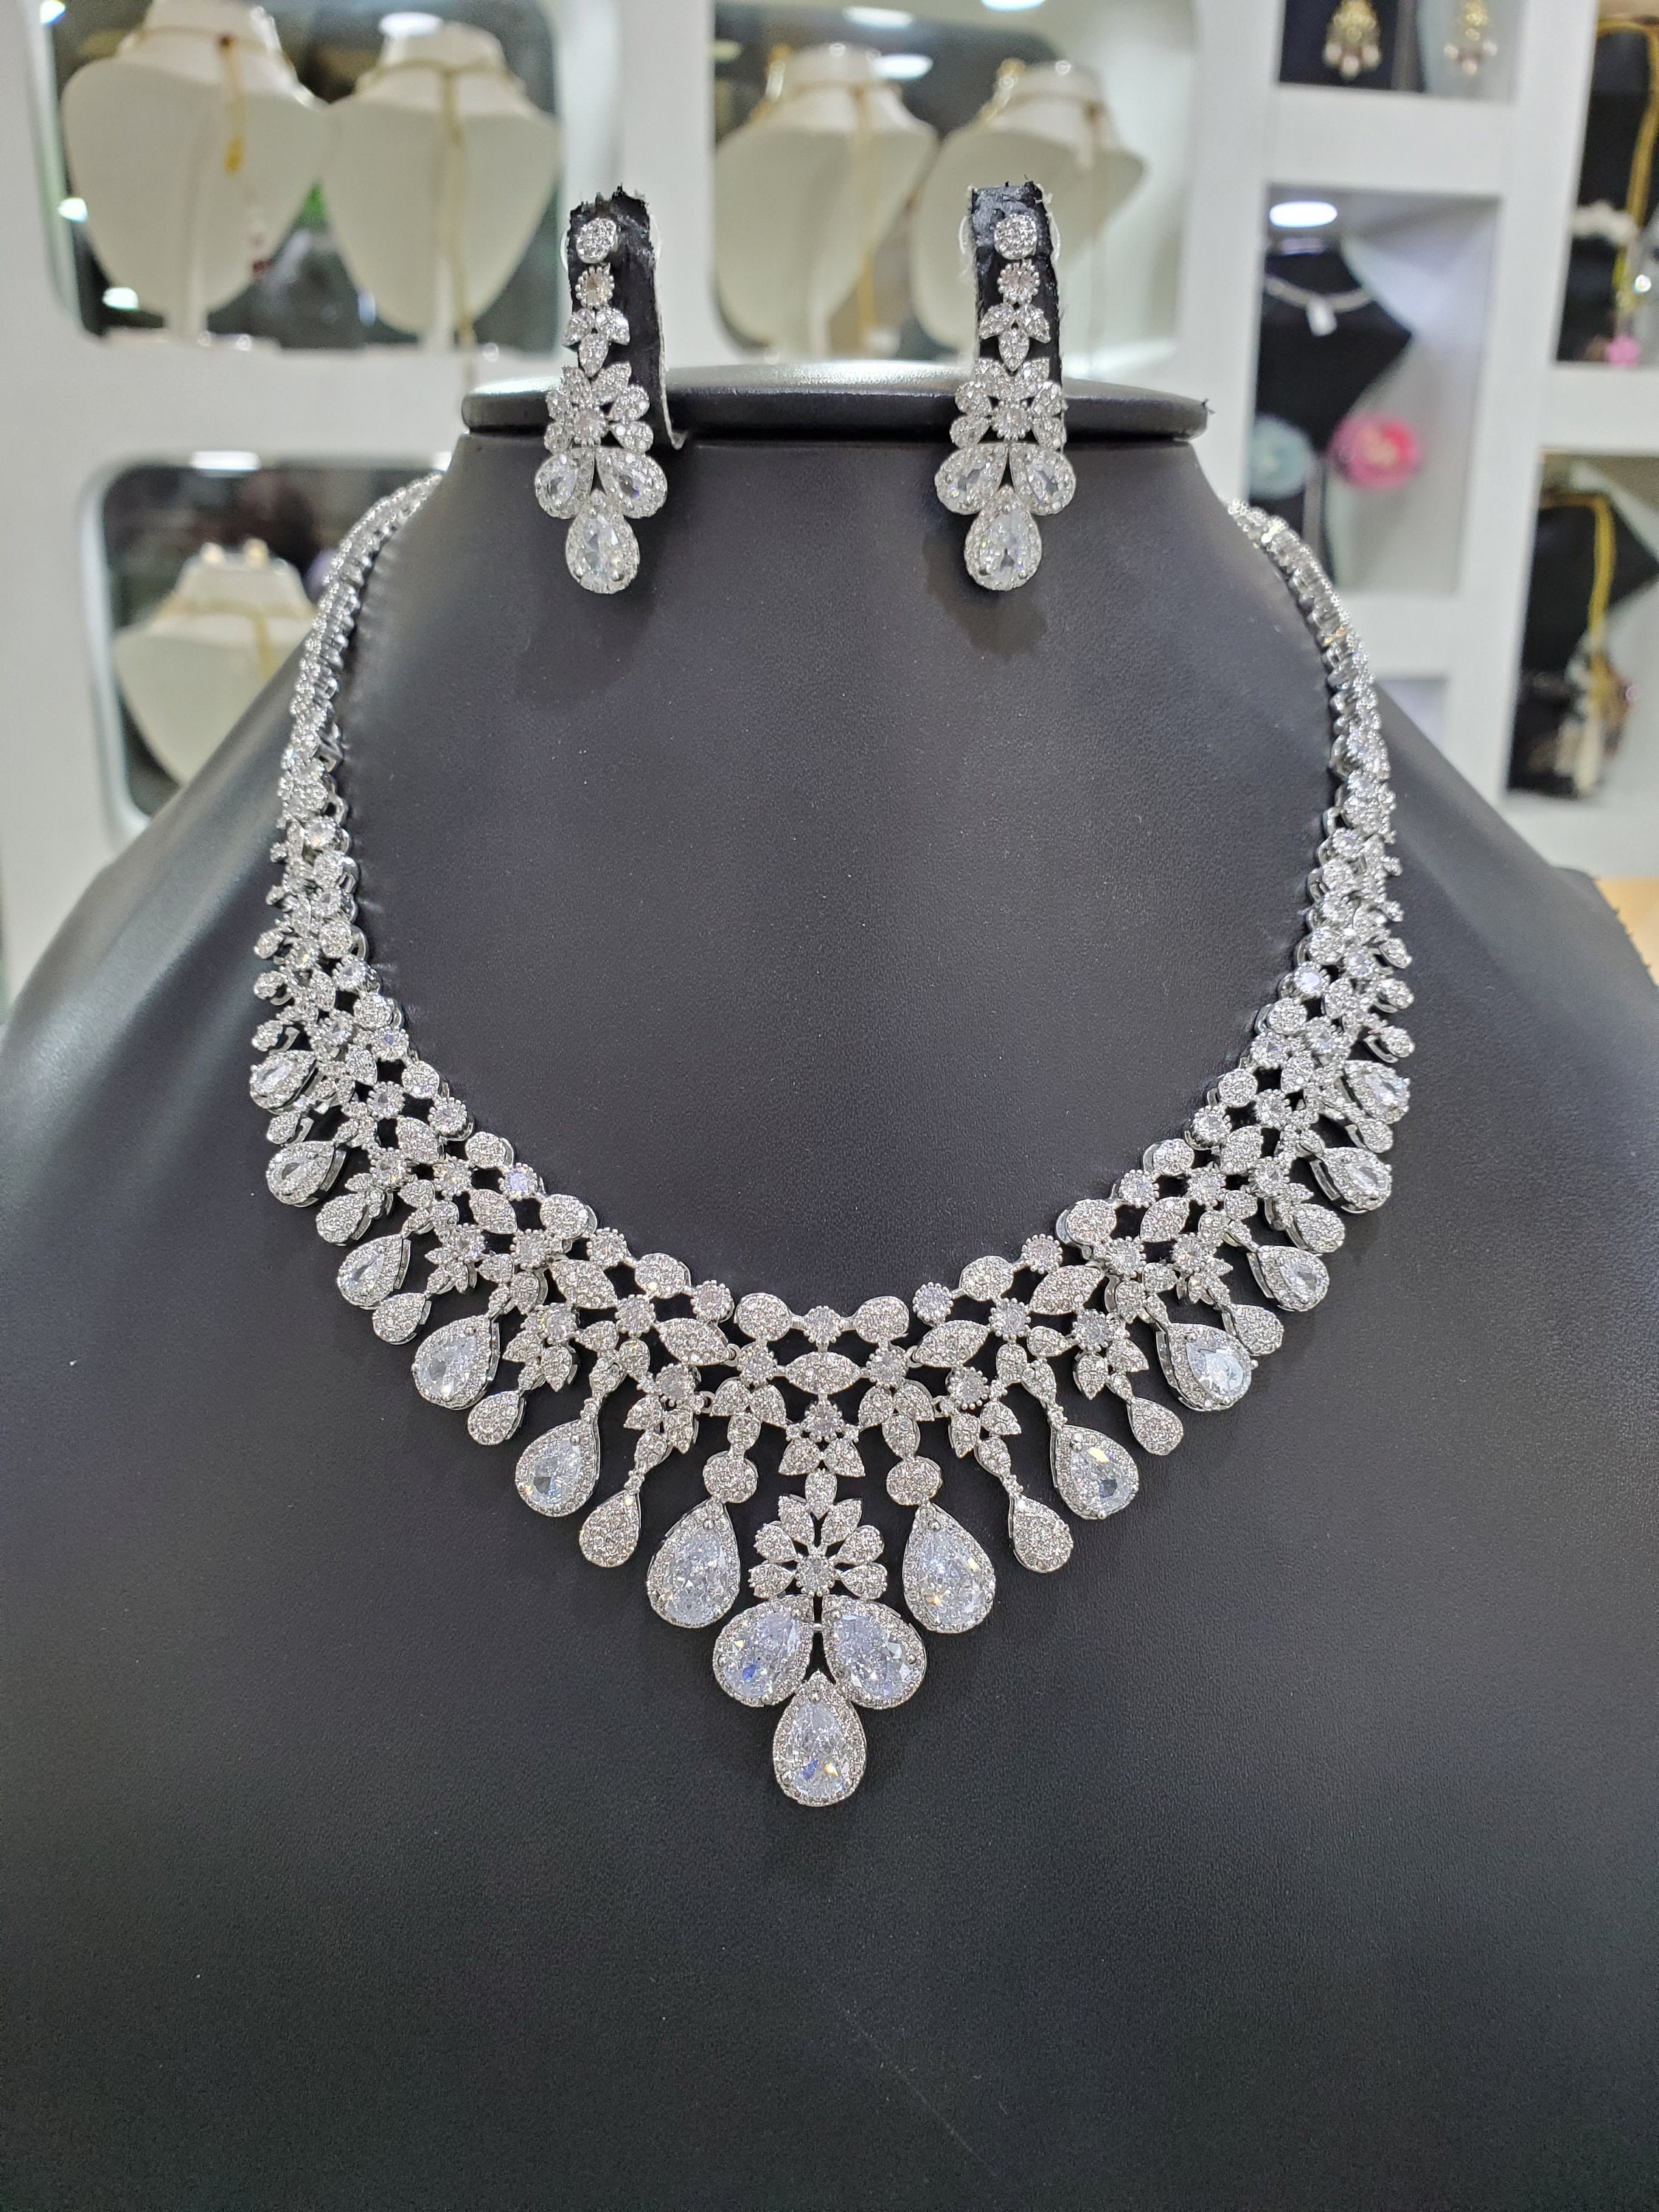 KhwaishJewellery Pink Stones Diamond CZ Choker Necklace/Earrings and Tikka,Bridal CZ Jewelry,Cubic Zirconia necklace,CZ Choker,Diamond Jewelry, Wedding Set